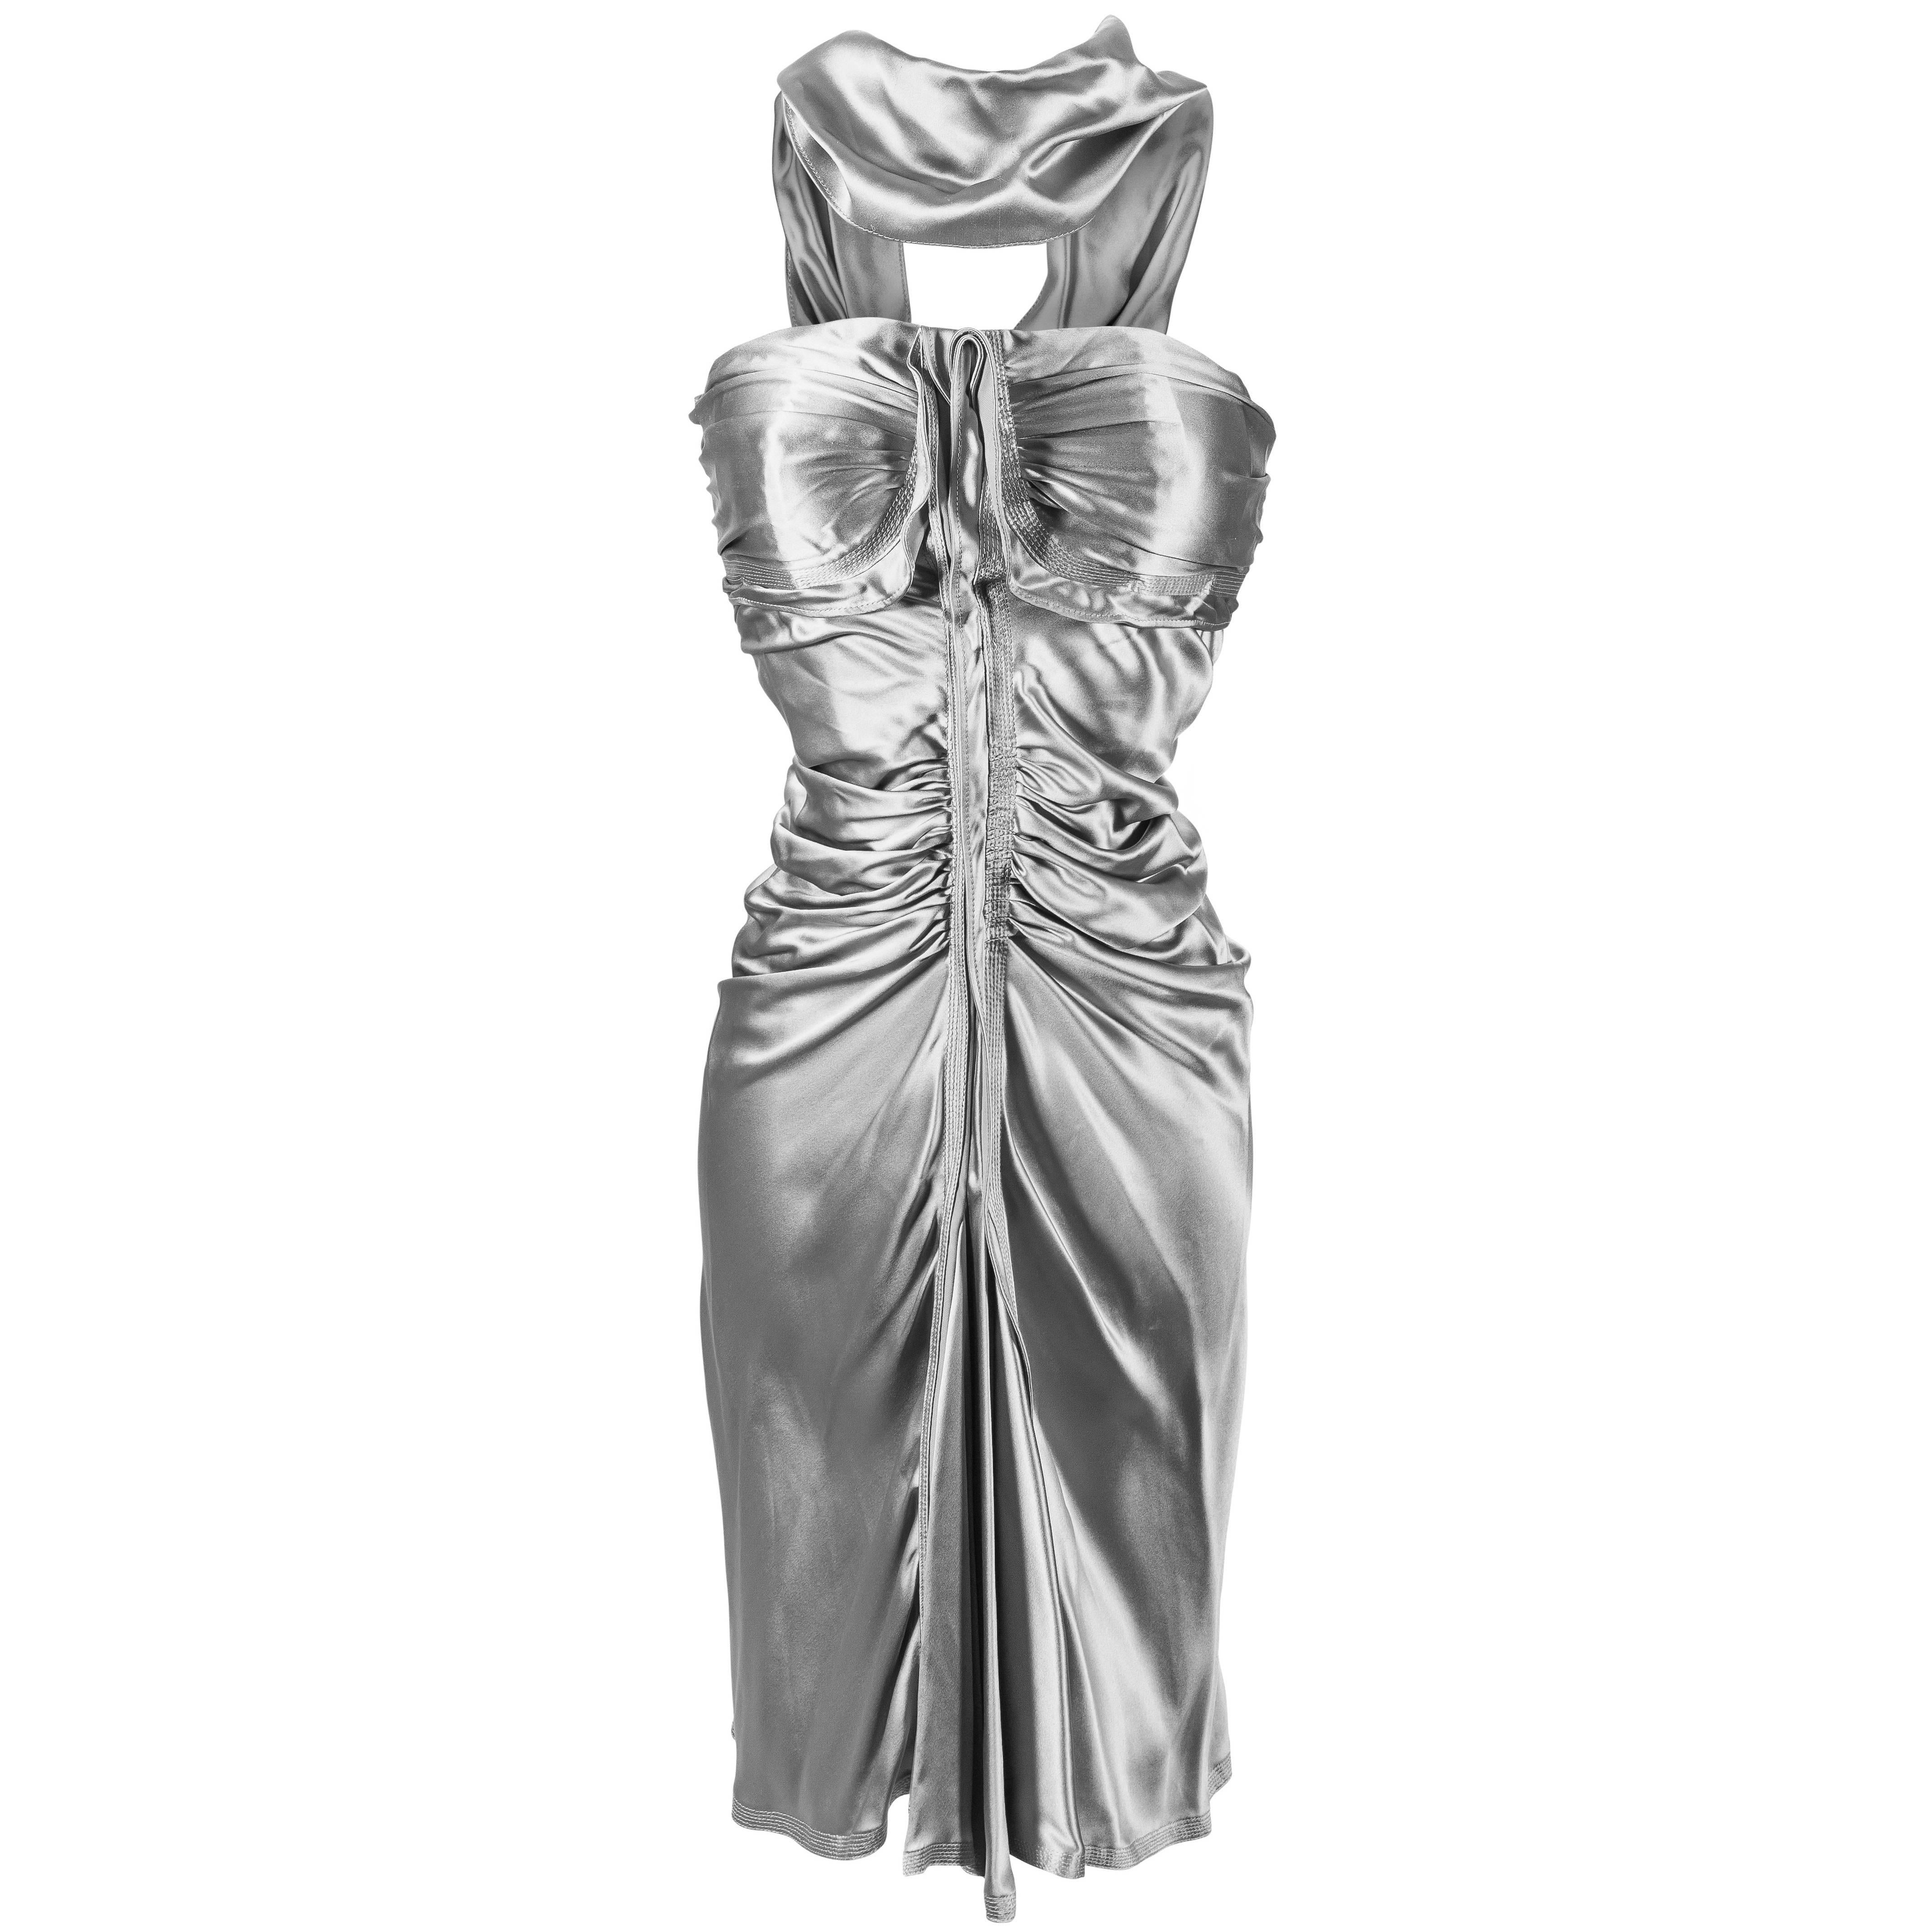 Tom Ford for Yves Saint Laurent Fall 2003 Grey Silk Dress For Sale